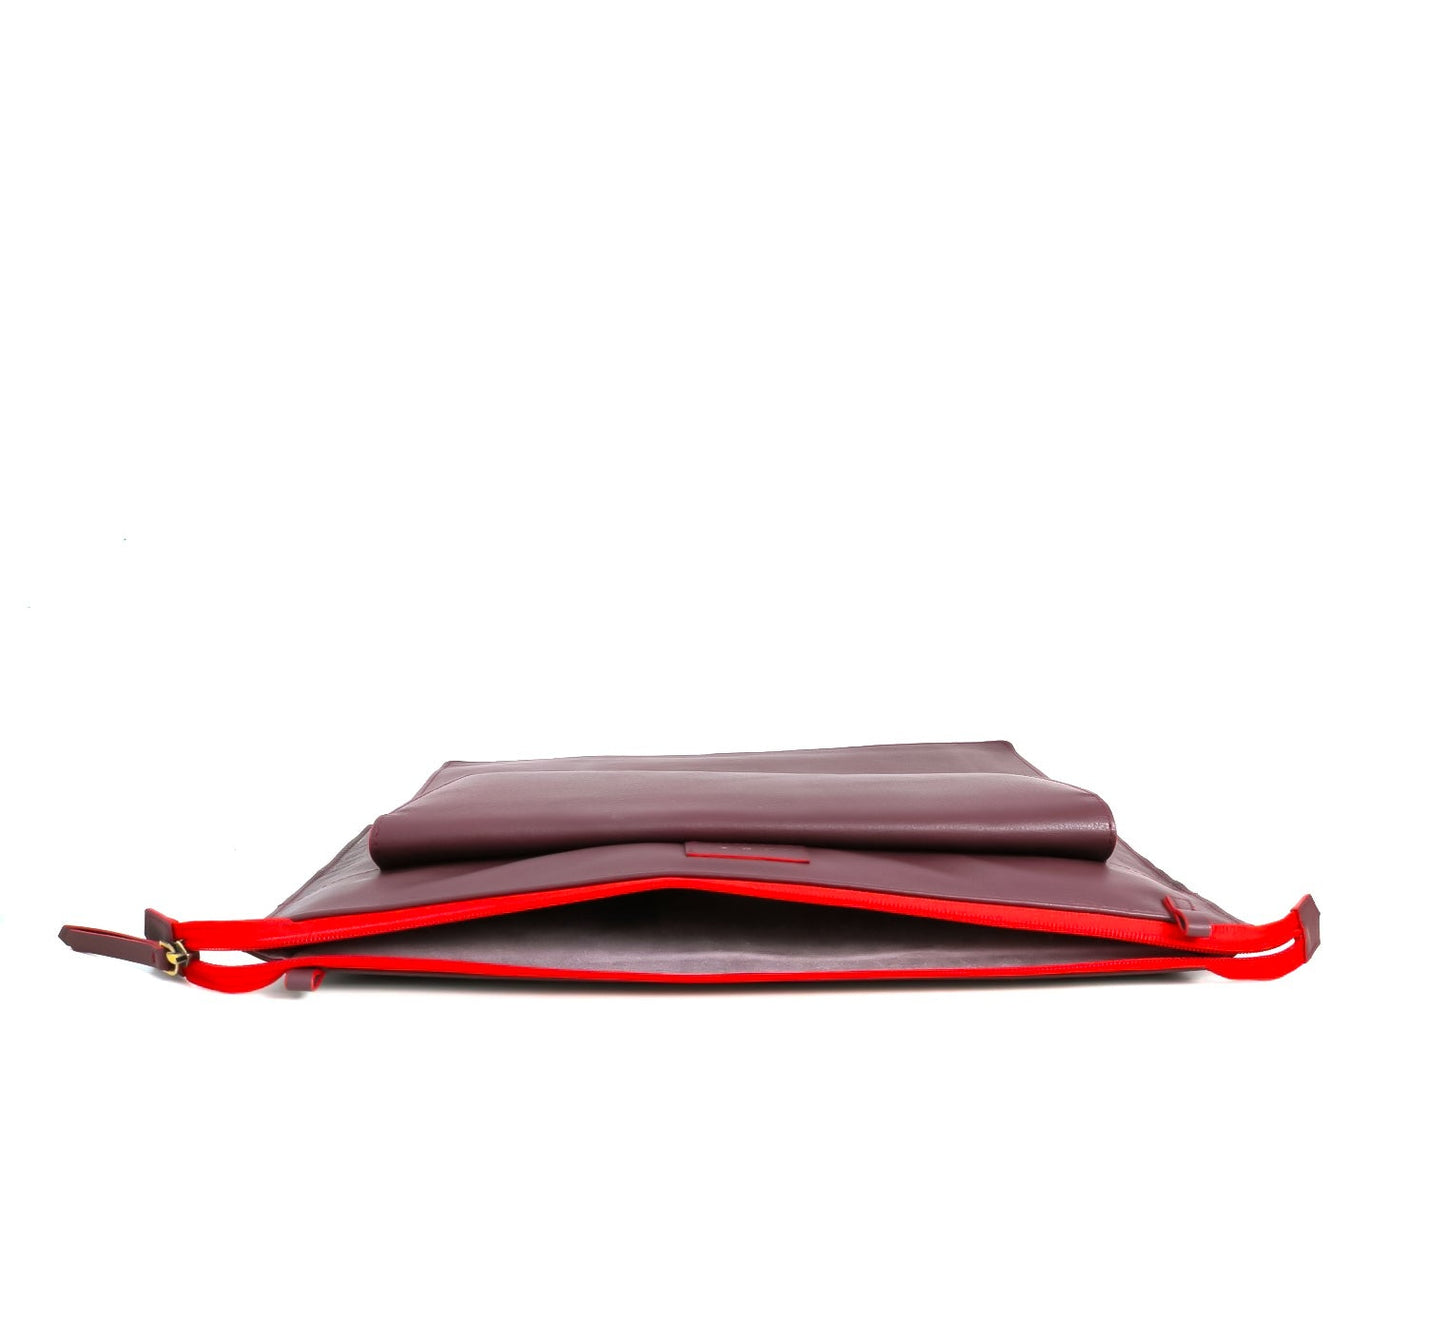 Workation Laptop Sleeve Bag - Burgundy